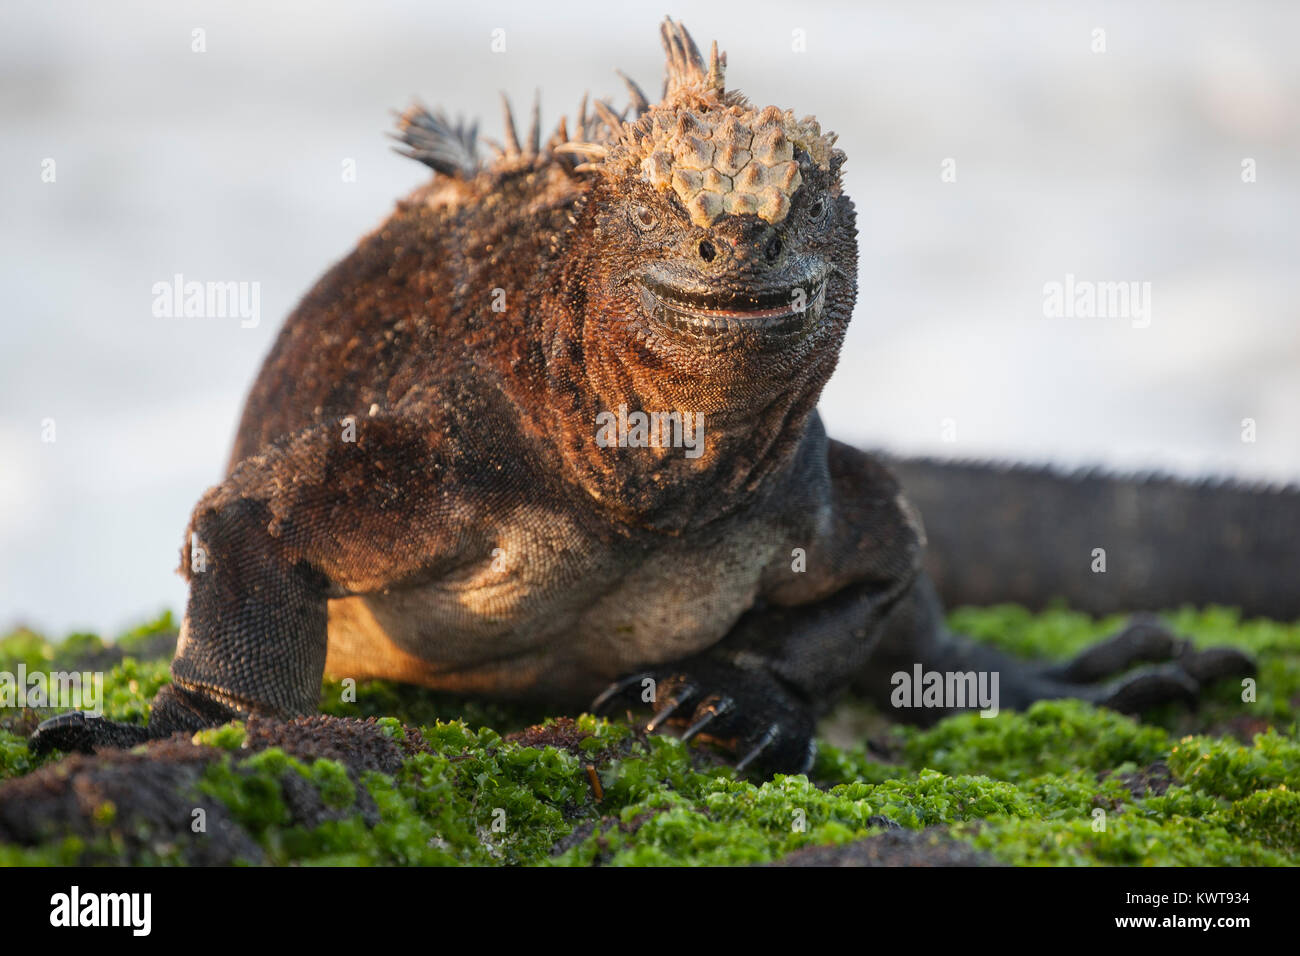 Iguane marin des Galapagos (Amblyrhynchus cristatus albemarlensis) sur un rocher couvert d'algues marines,. Banque D'Images